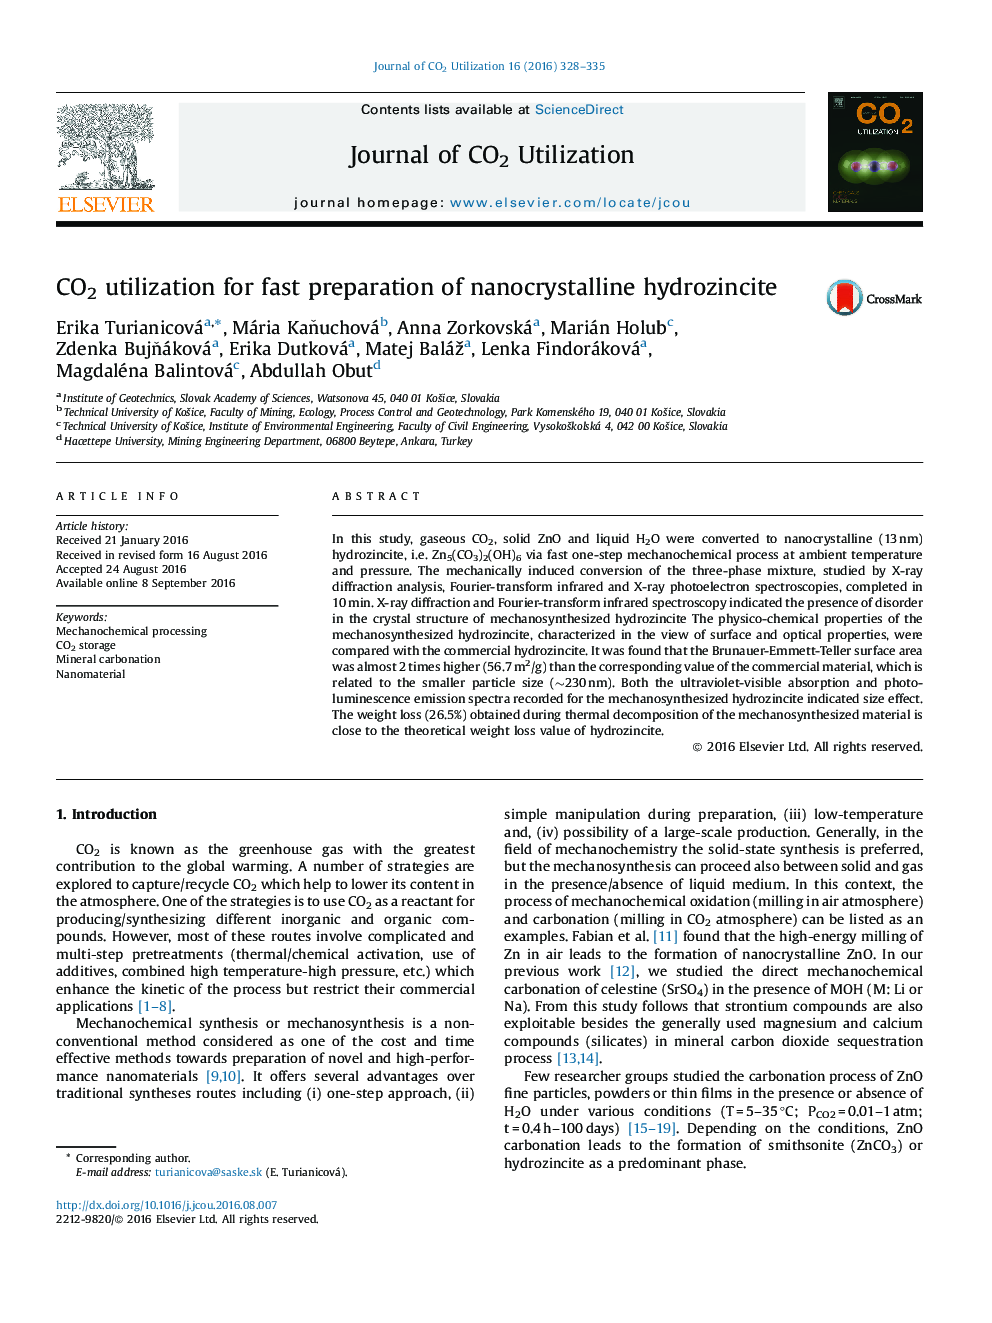 CO2 utilization for fast preparation of nanocrystalline hydrozincite